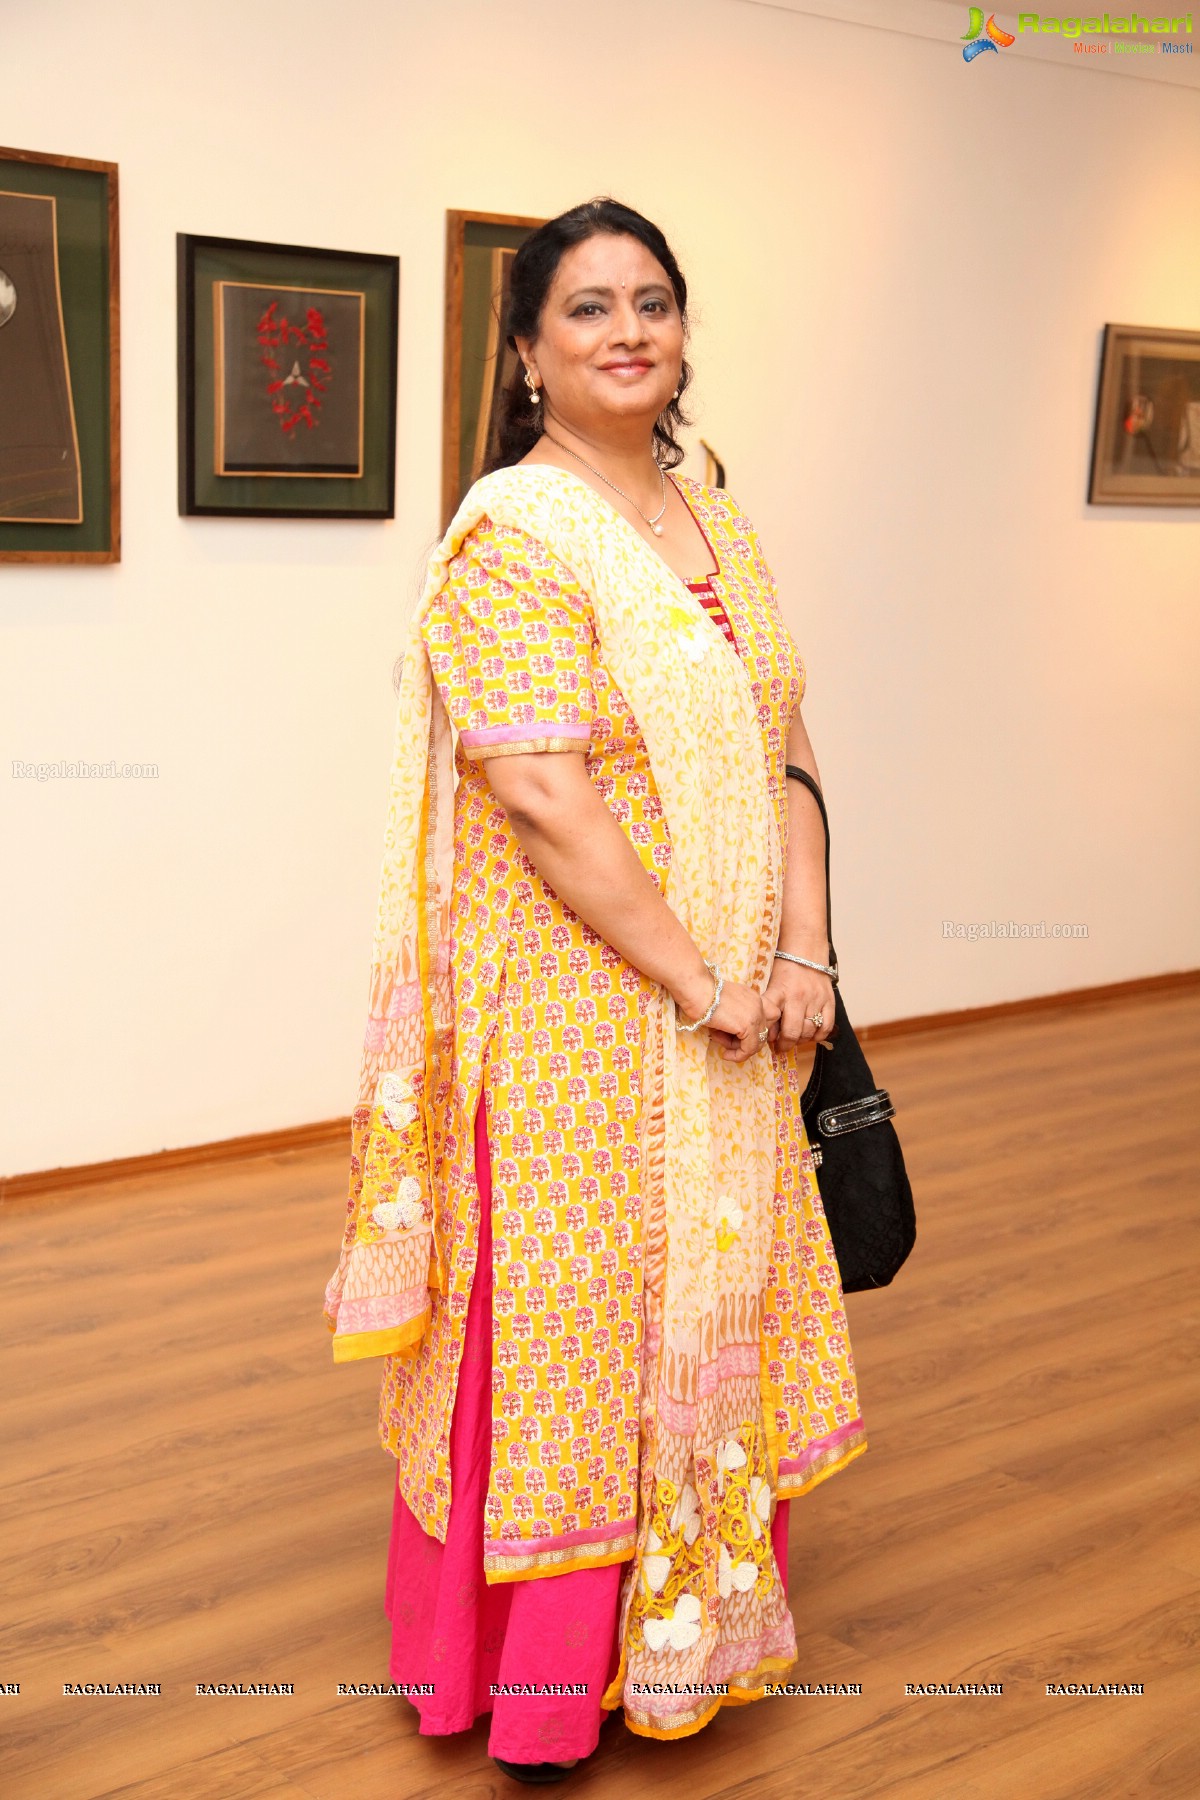 Kalakriti Art Gallery - A Needle, a Stitch & Many Tales by Bapi Das